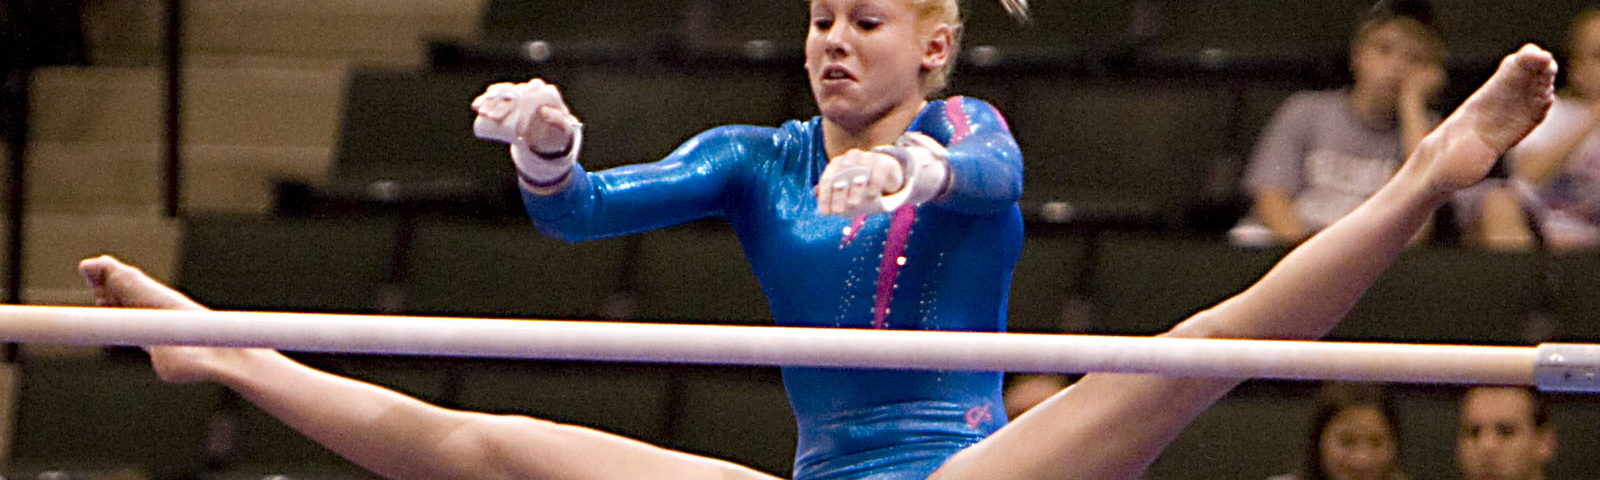 Women's Gymnastics Leotards Ashley Priess